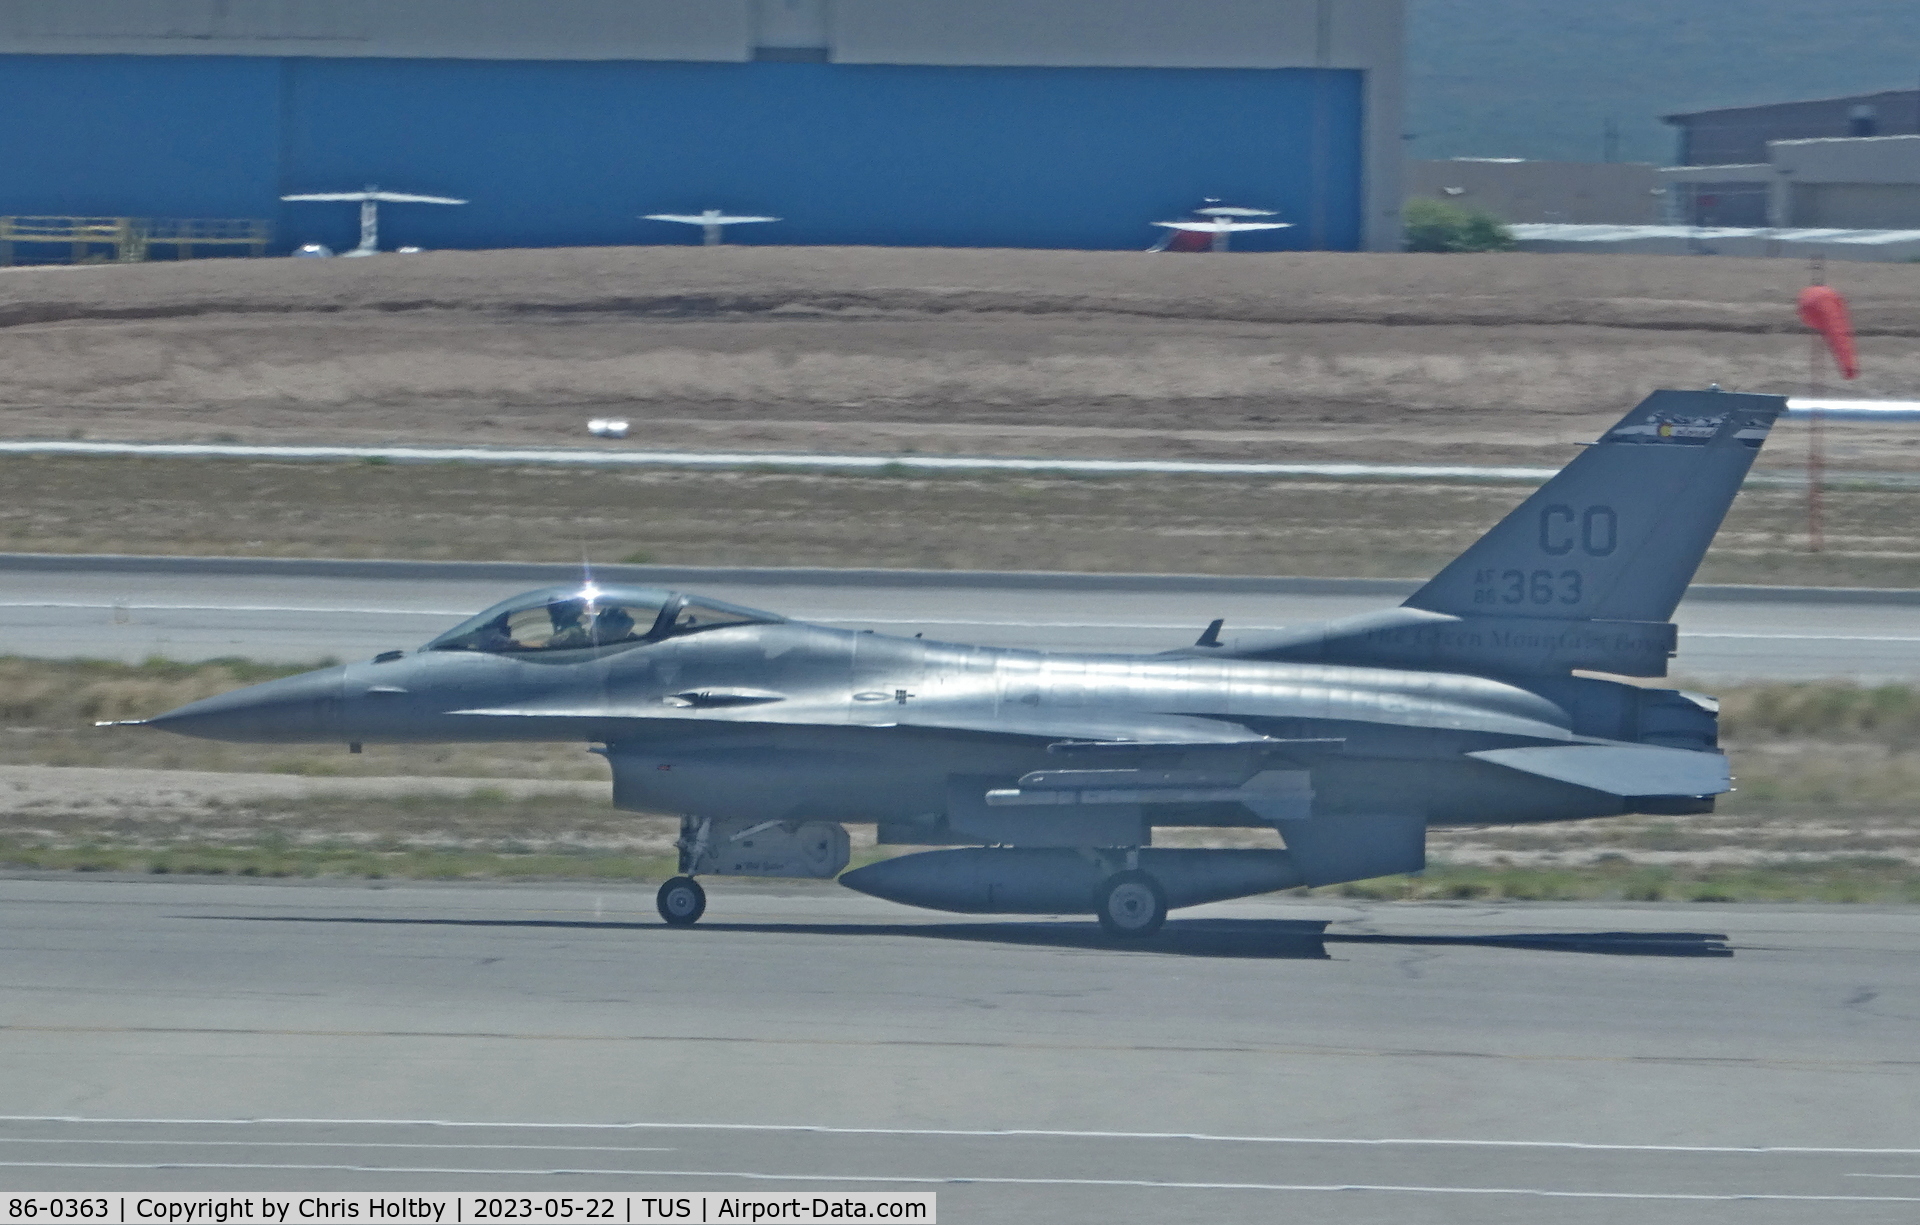 86-0363, 1986 General Dynamics F-16C Fighting Falcon C/N 5C-469, Landing at Tucson International Airport, Arizona